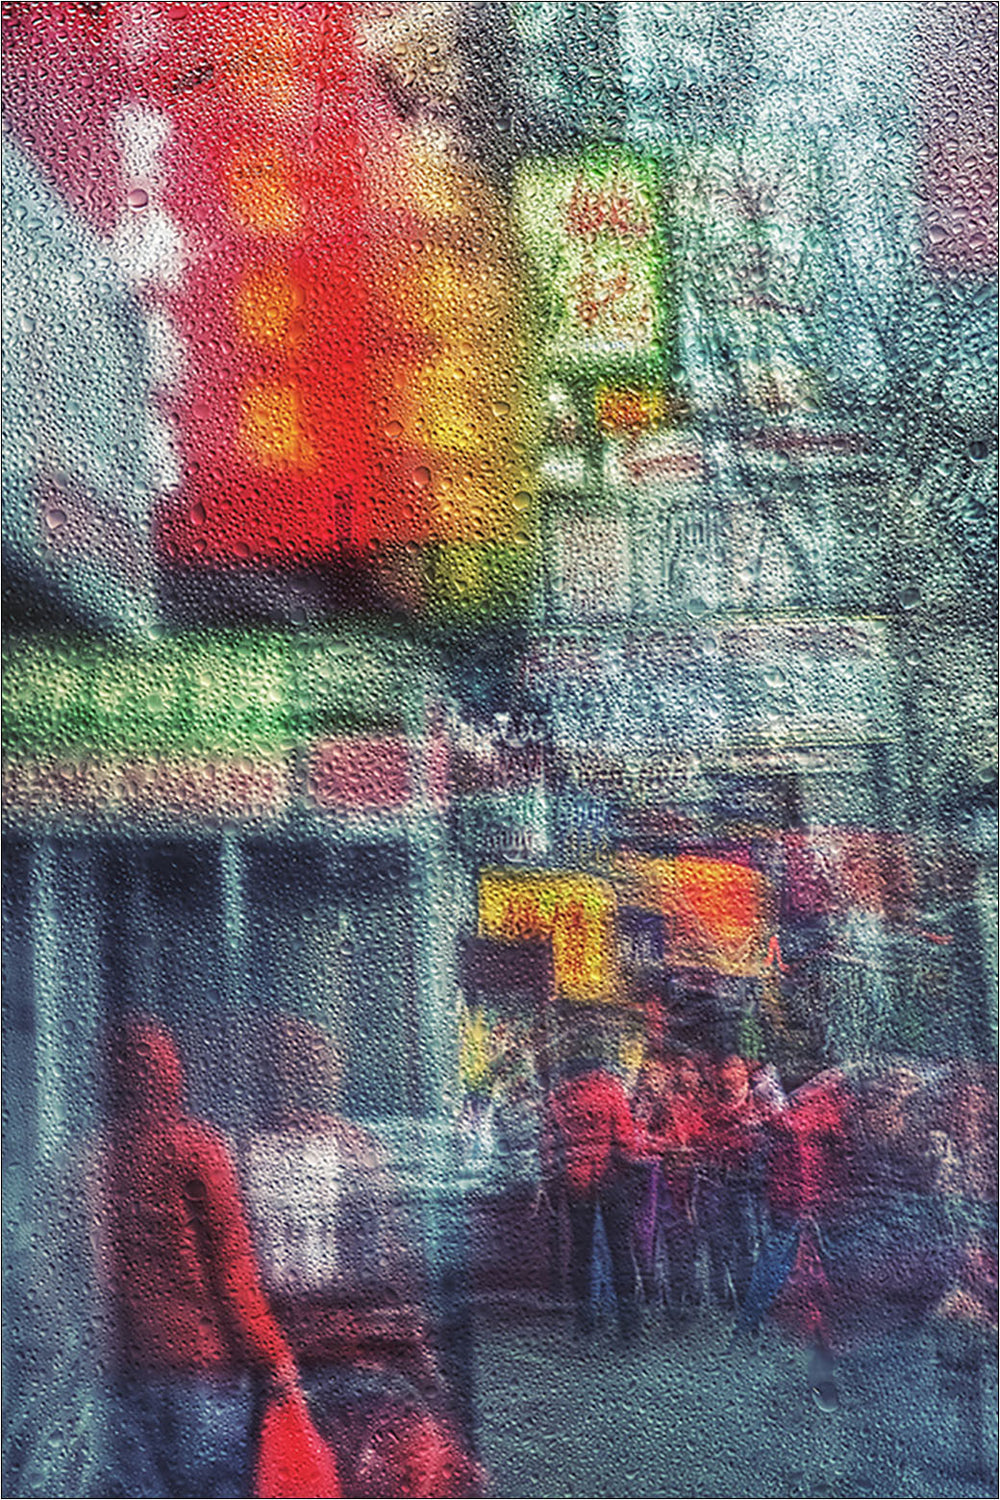 Rain in Chinatown, New York. [3/3] | New York Through the Rain Series. | Limited Ed. Fine Art Print.